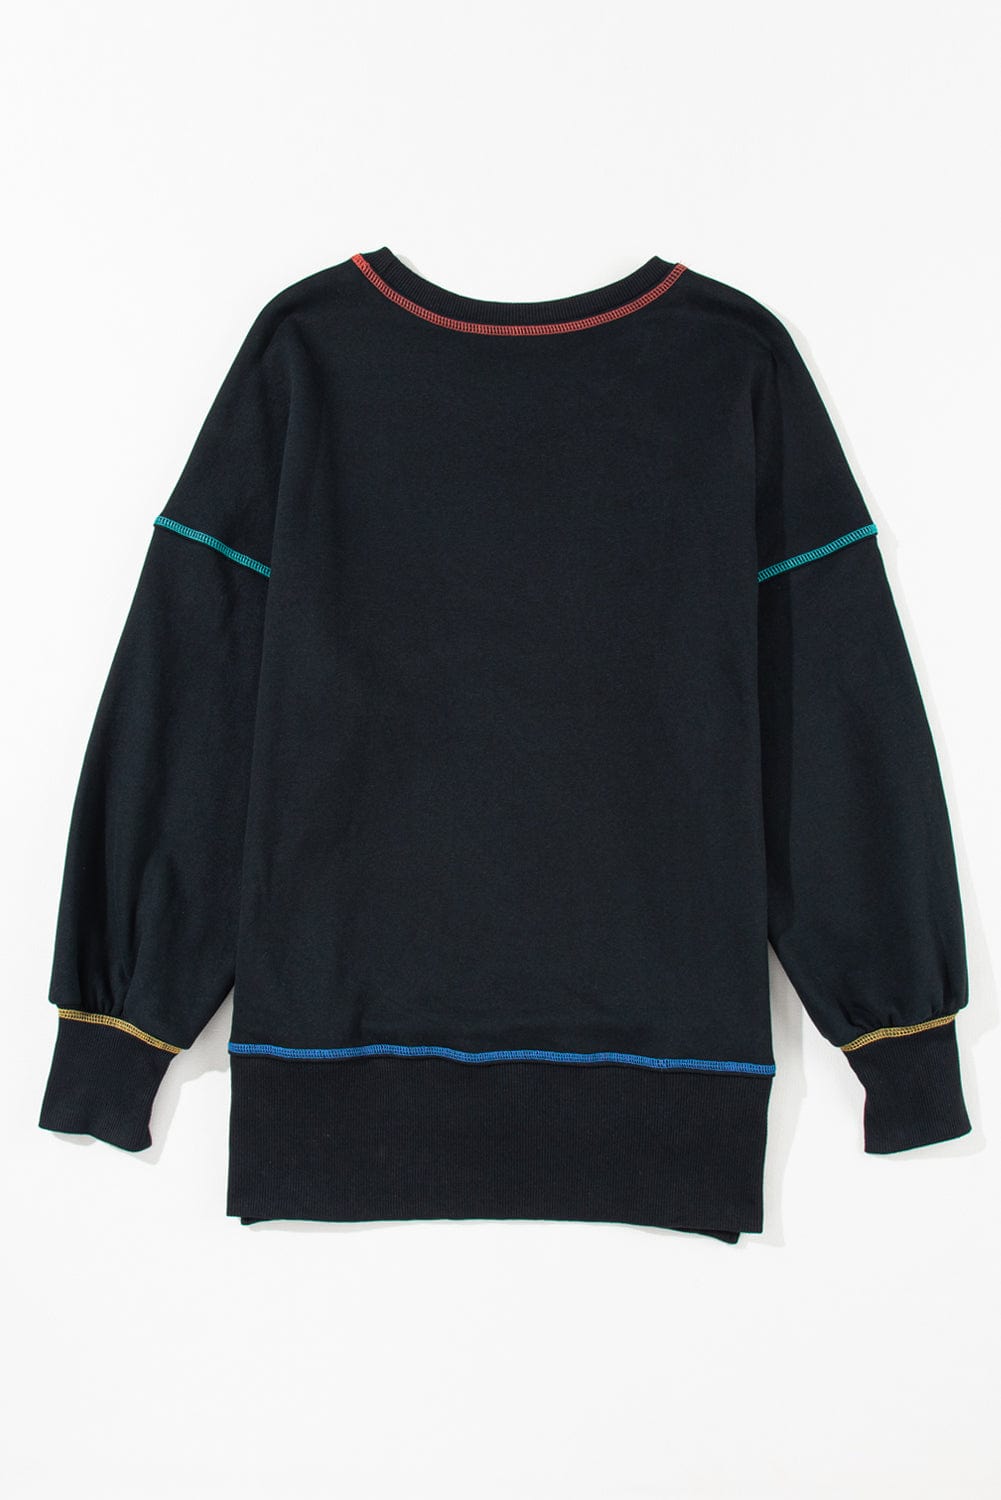 The802Gypsy  Tops/Sweatshirts & Hoodies TRAVELING GYPSY-Contrast Stitching Baggy Sweatshirt